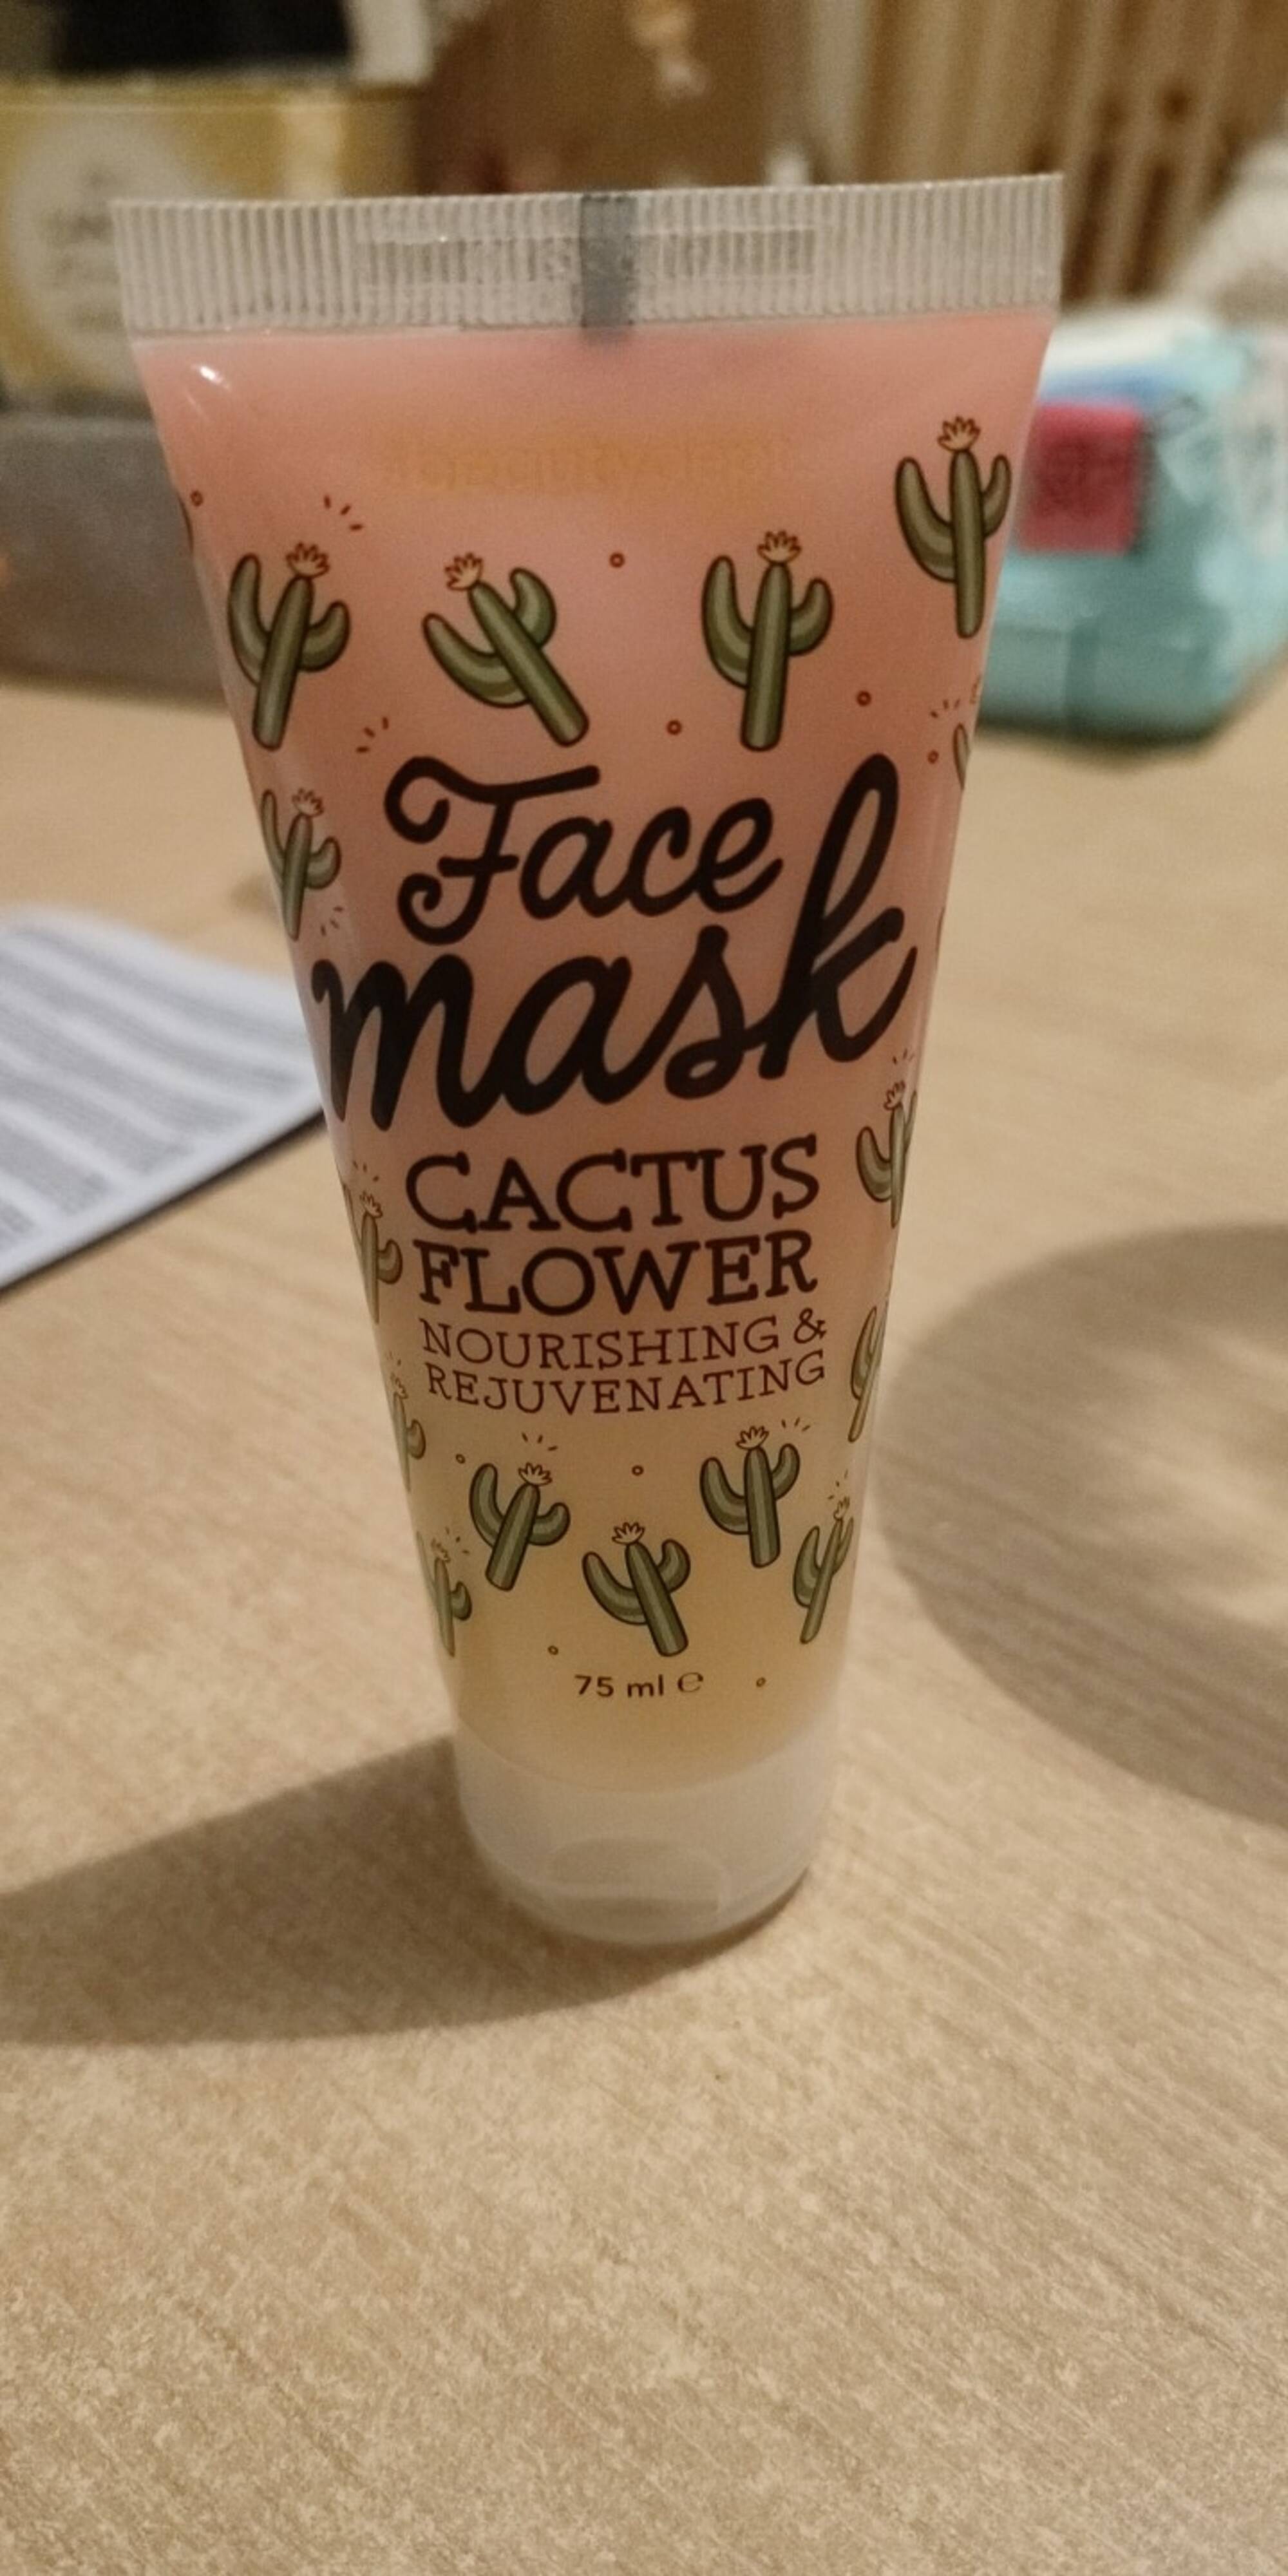 THE BEAUTY DEPT - Face mask cactus flower